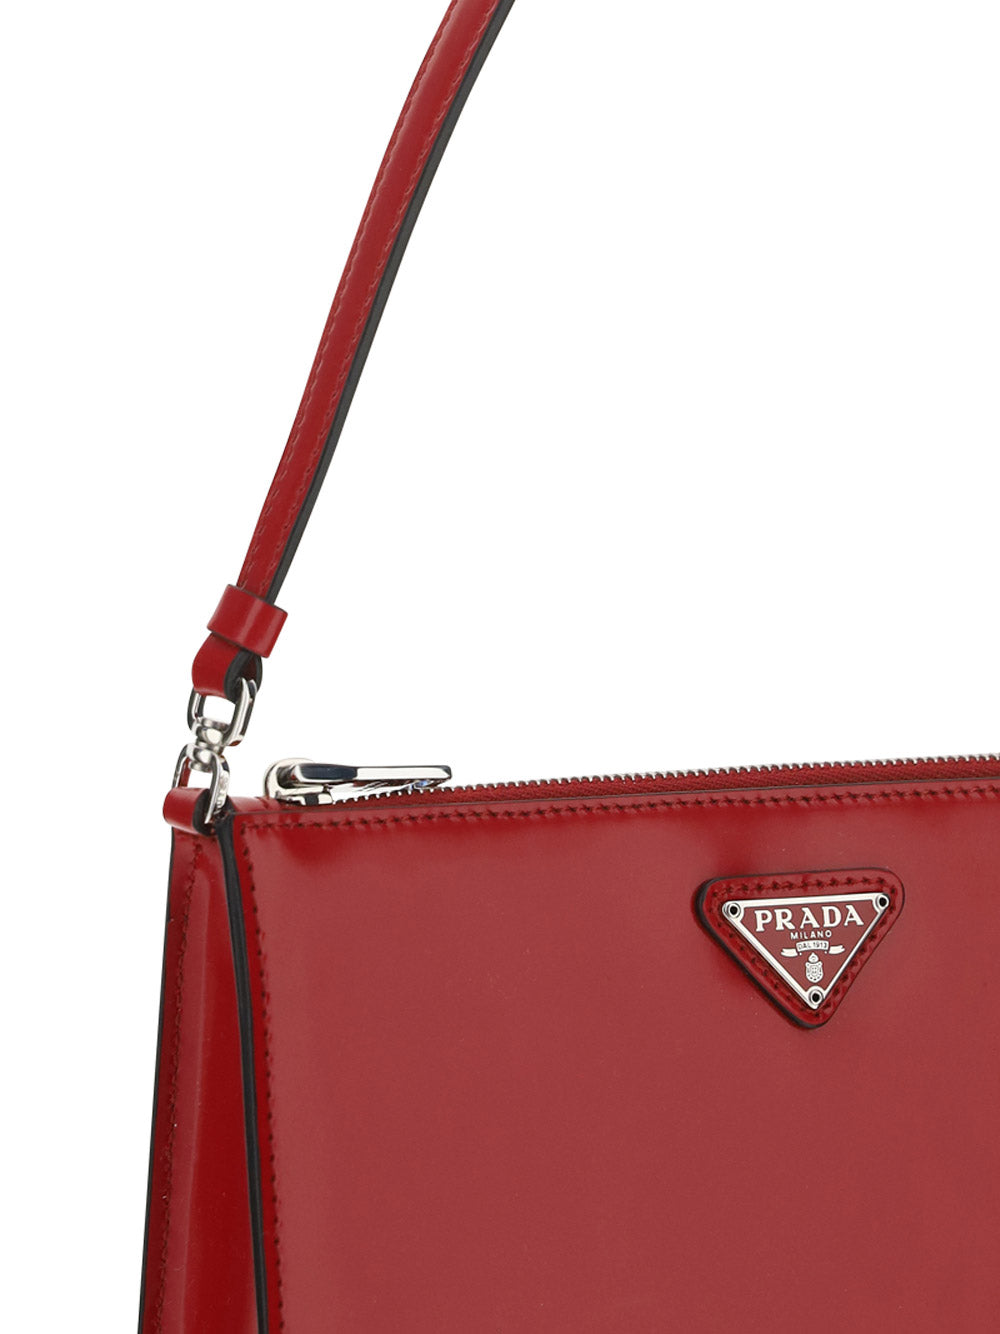 Prada: Red Brushed Leather Bag